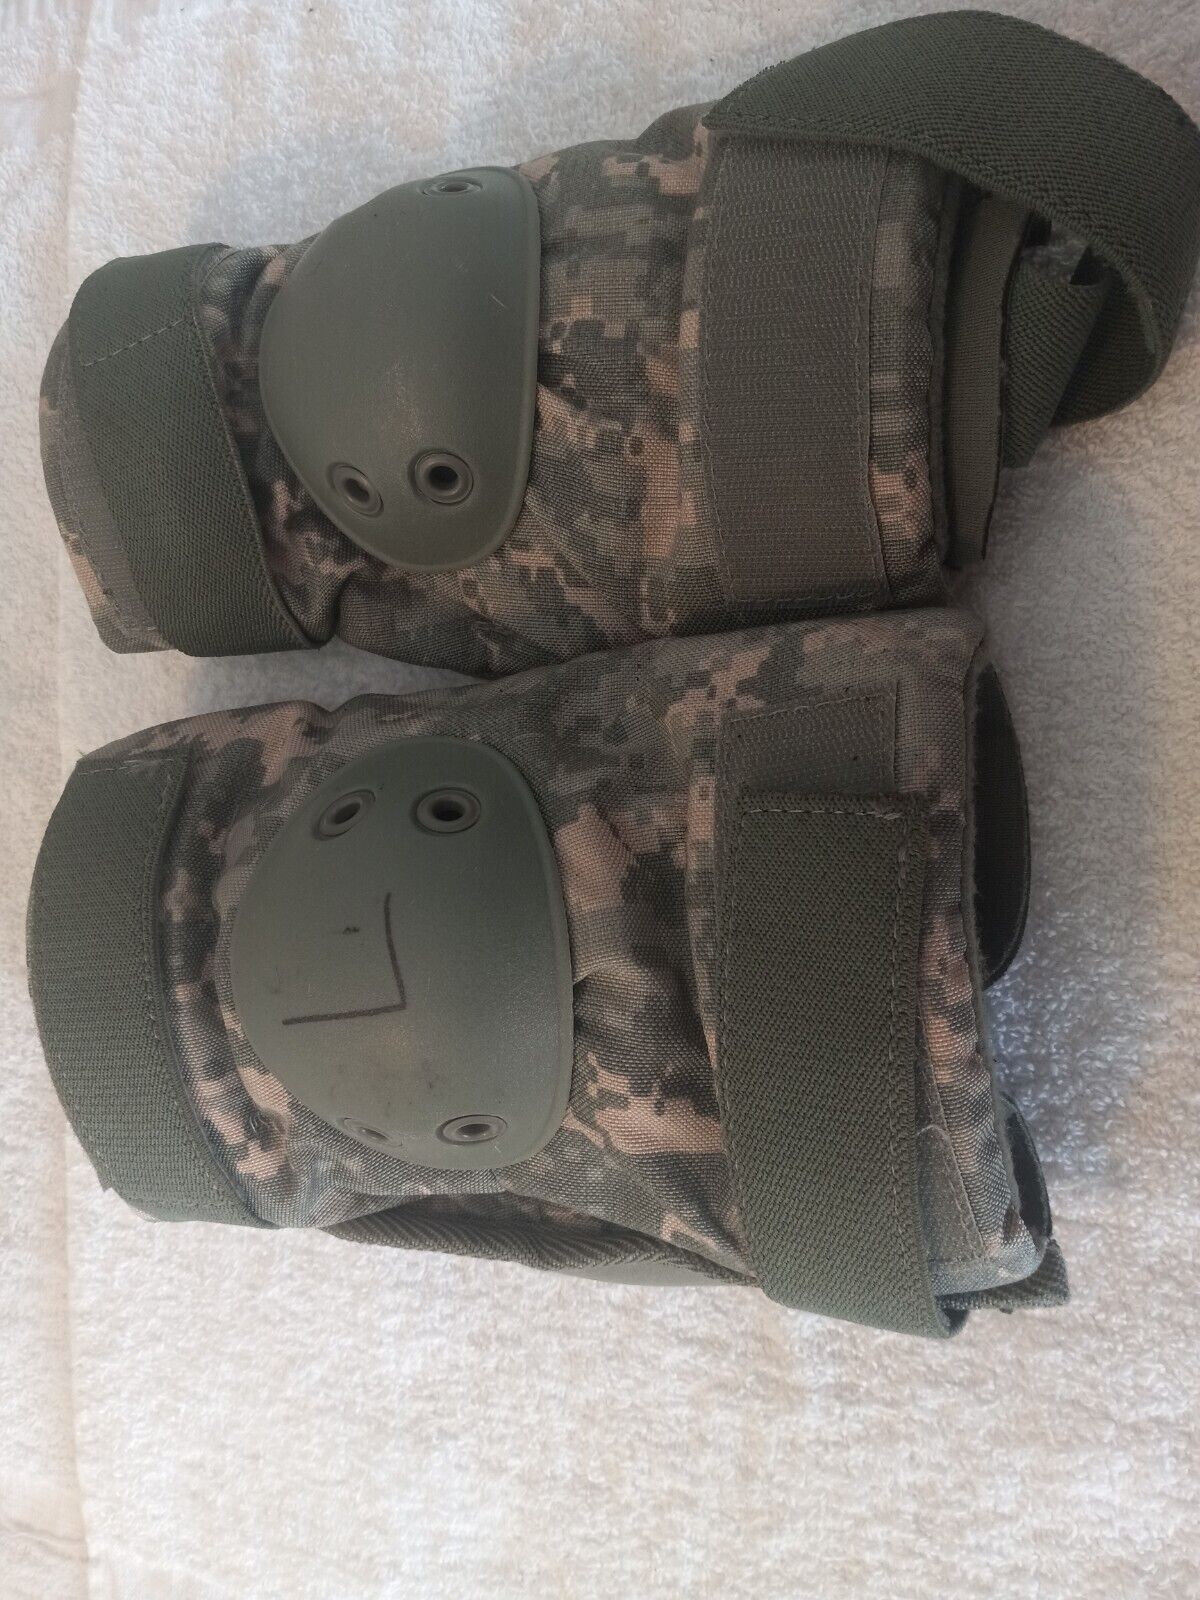 USGI Knee Pads & Elbow Pads, ACU Pattern (Small/Meduim/Large)